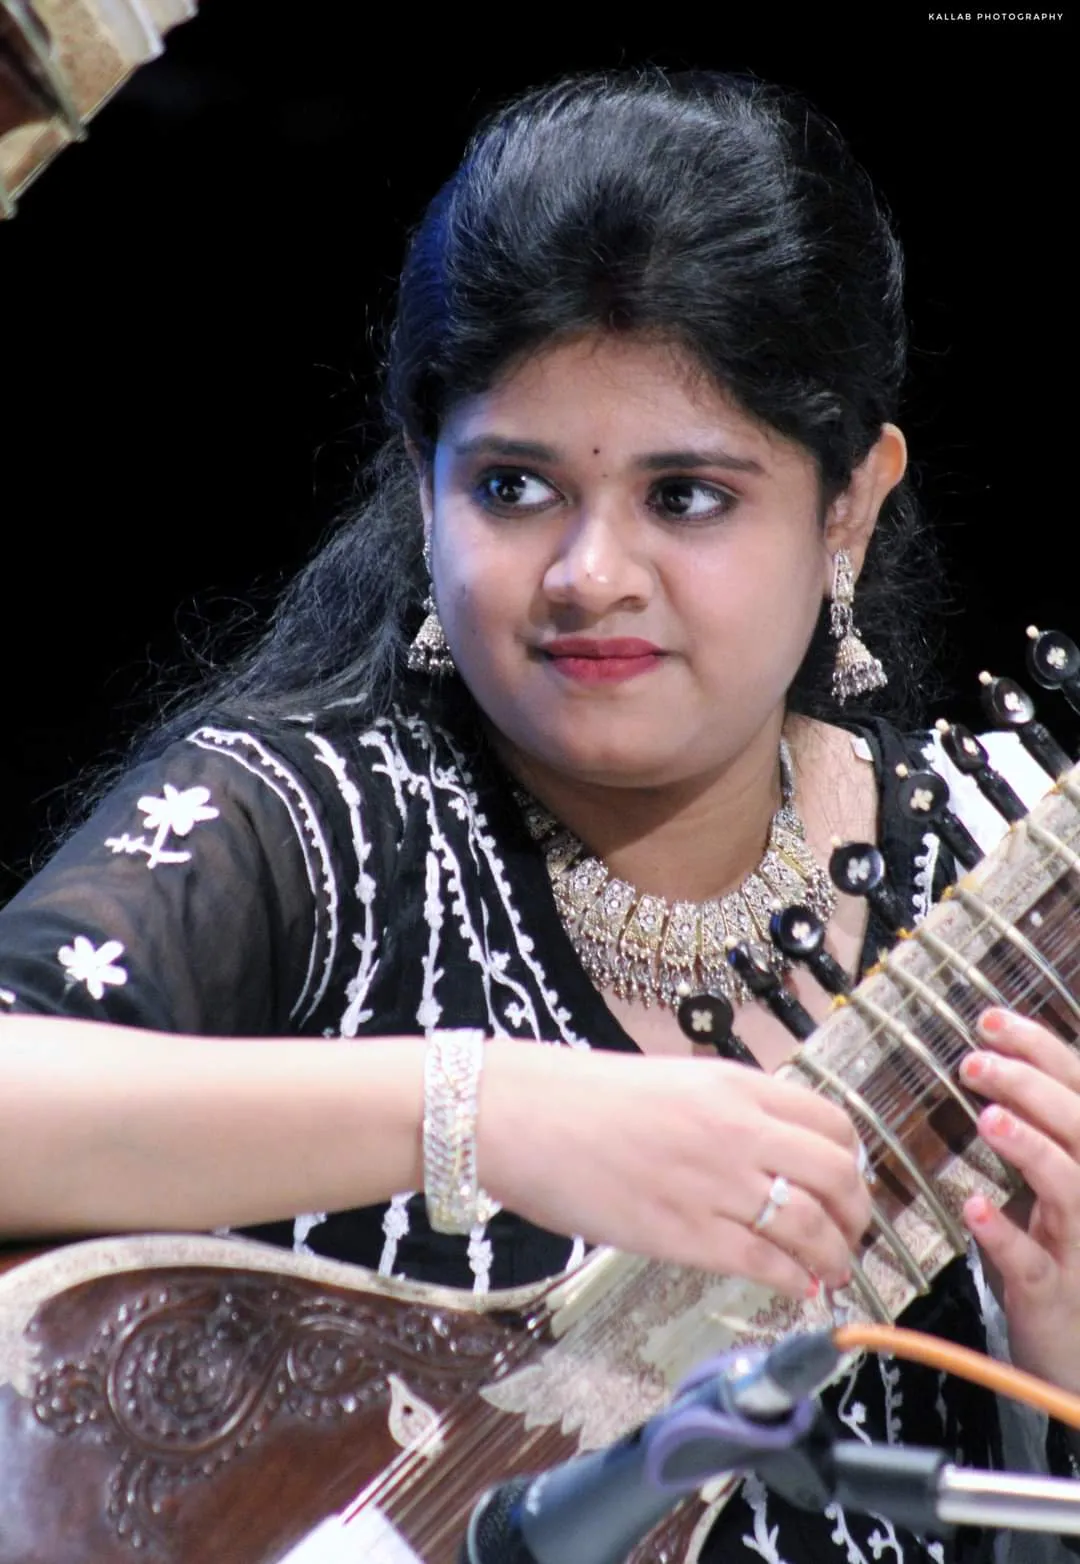 Srijanee Banerjee